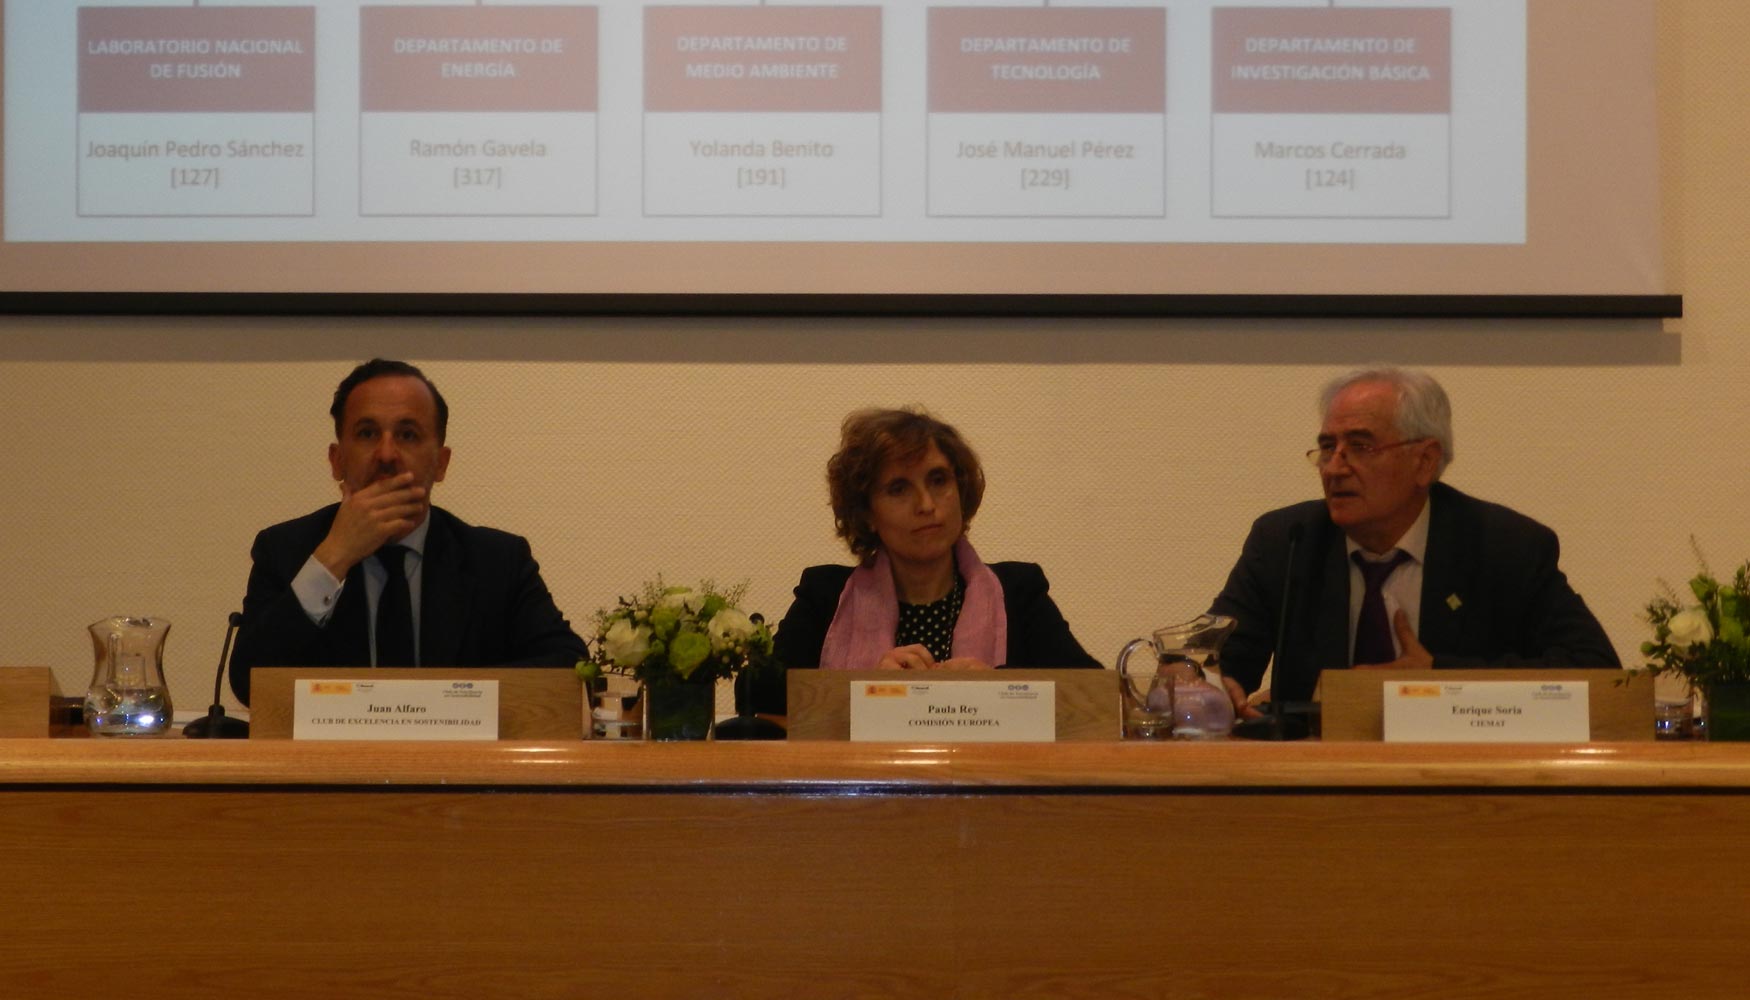 De izq. a dcha.: Juan Alfaro (Club de Excelencia en Sostenibilidad), Paula Rey (Comisin Europea), y Enrique Soria (Ciemat)...